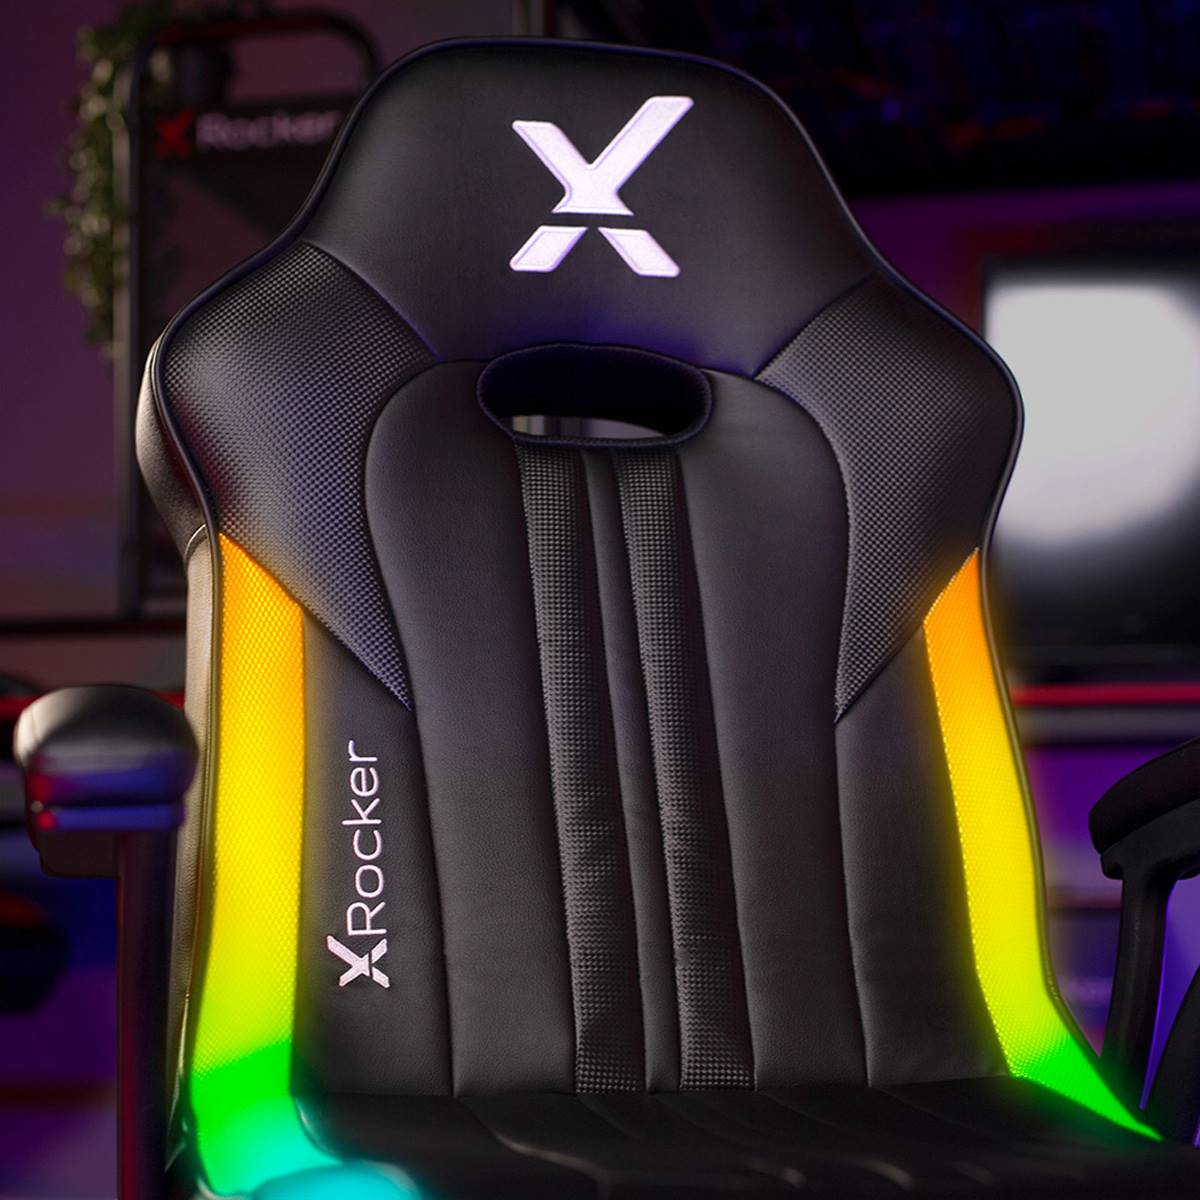 X Rocker Torque RGB Audio Pedestal Gaming Chair W/ Subwoofer